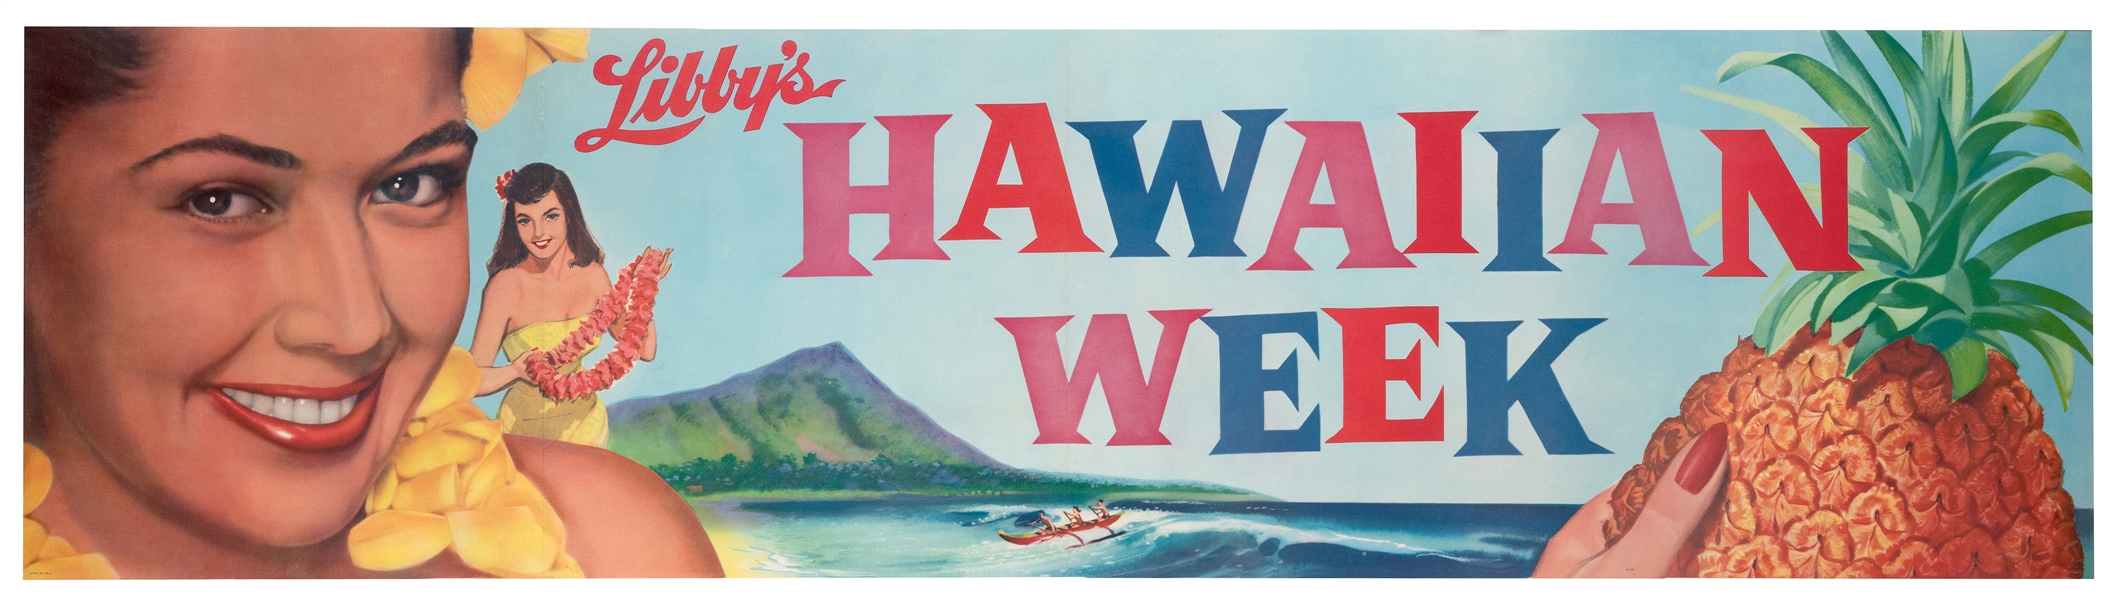 [Hawaii] Libby’s Hawaiian Week Pineapple Advertising Poster.